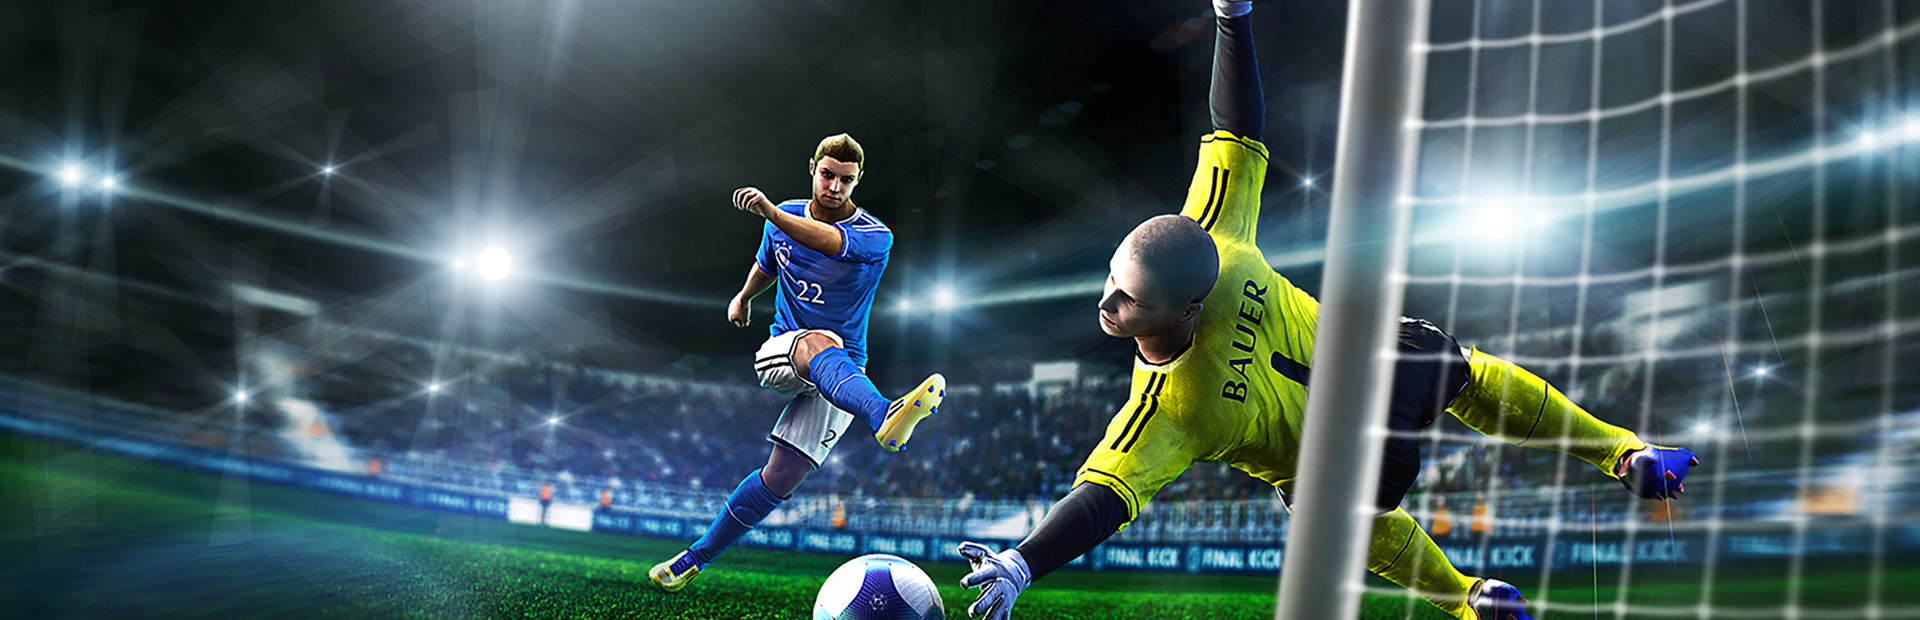 Final Soccer VR cover image